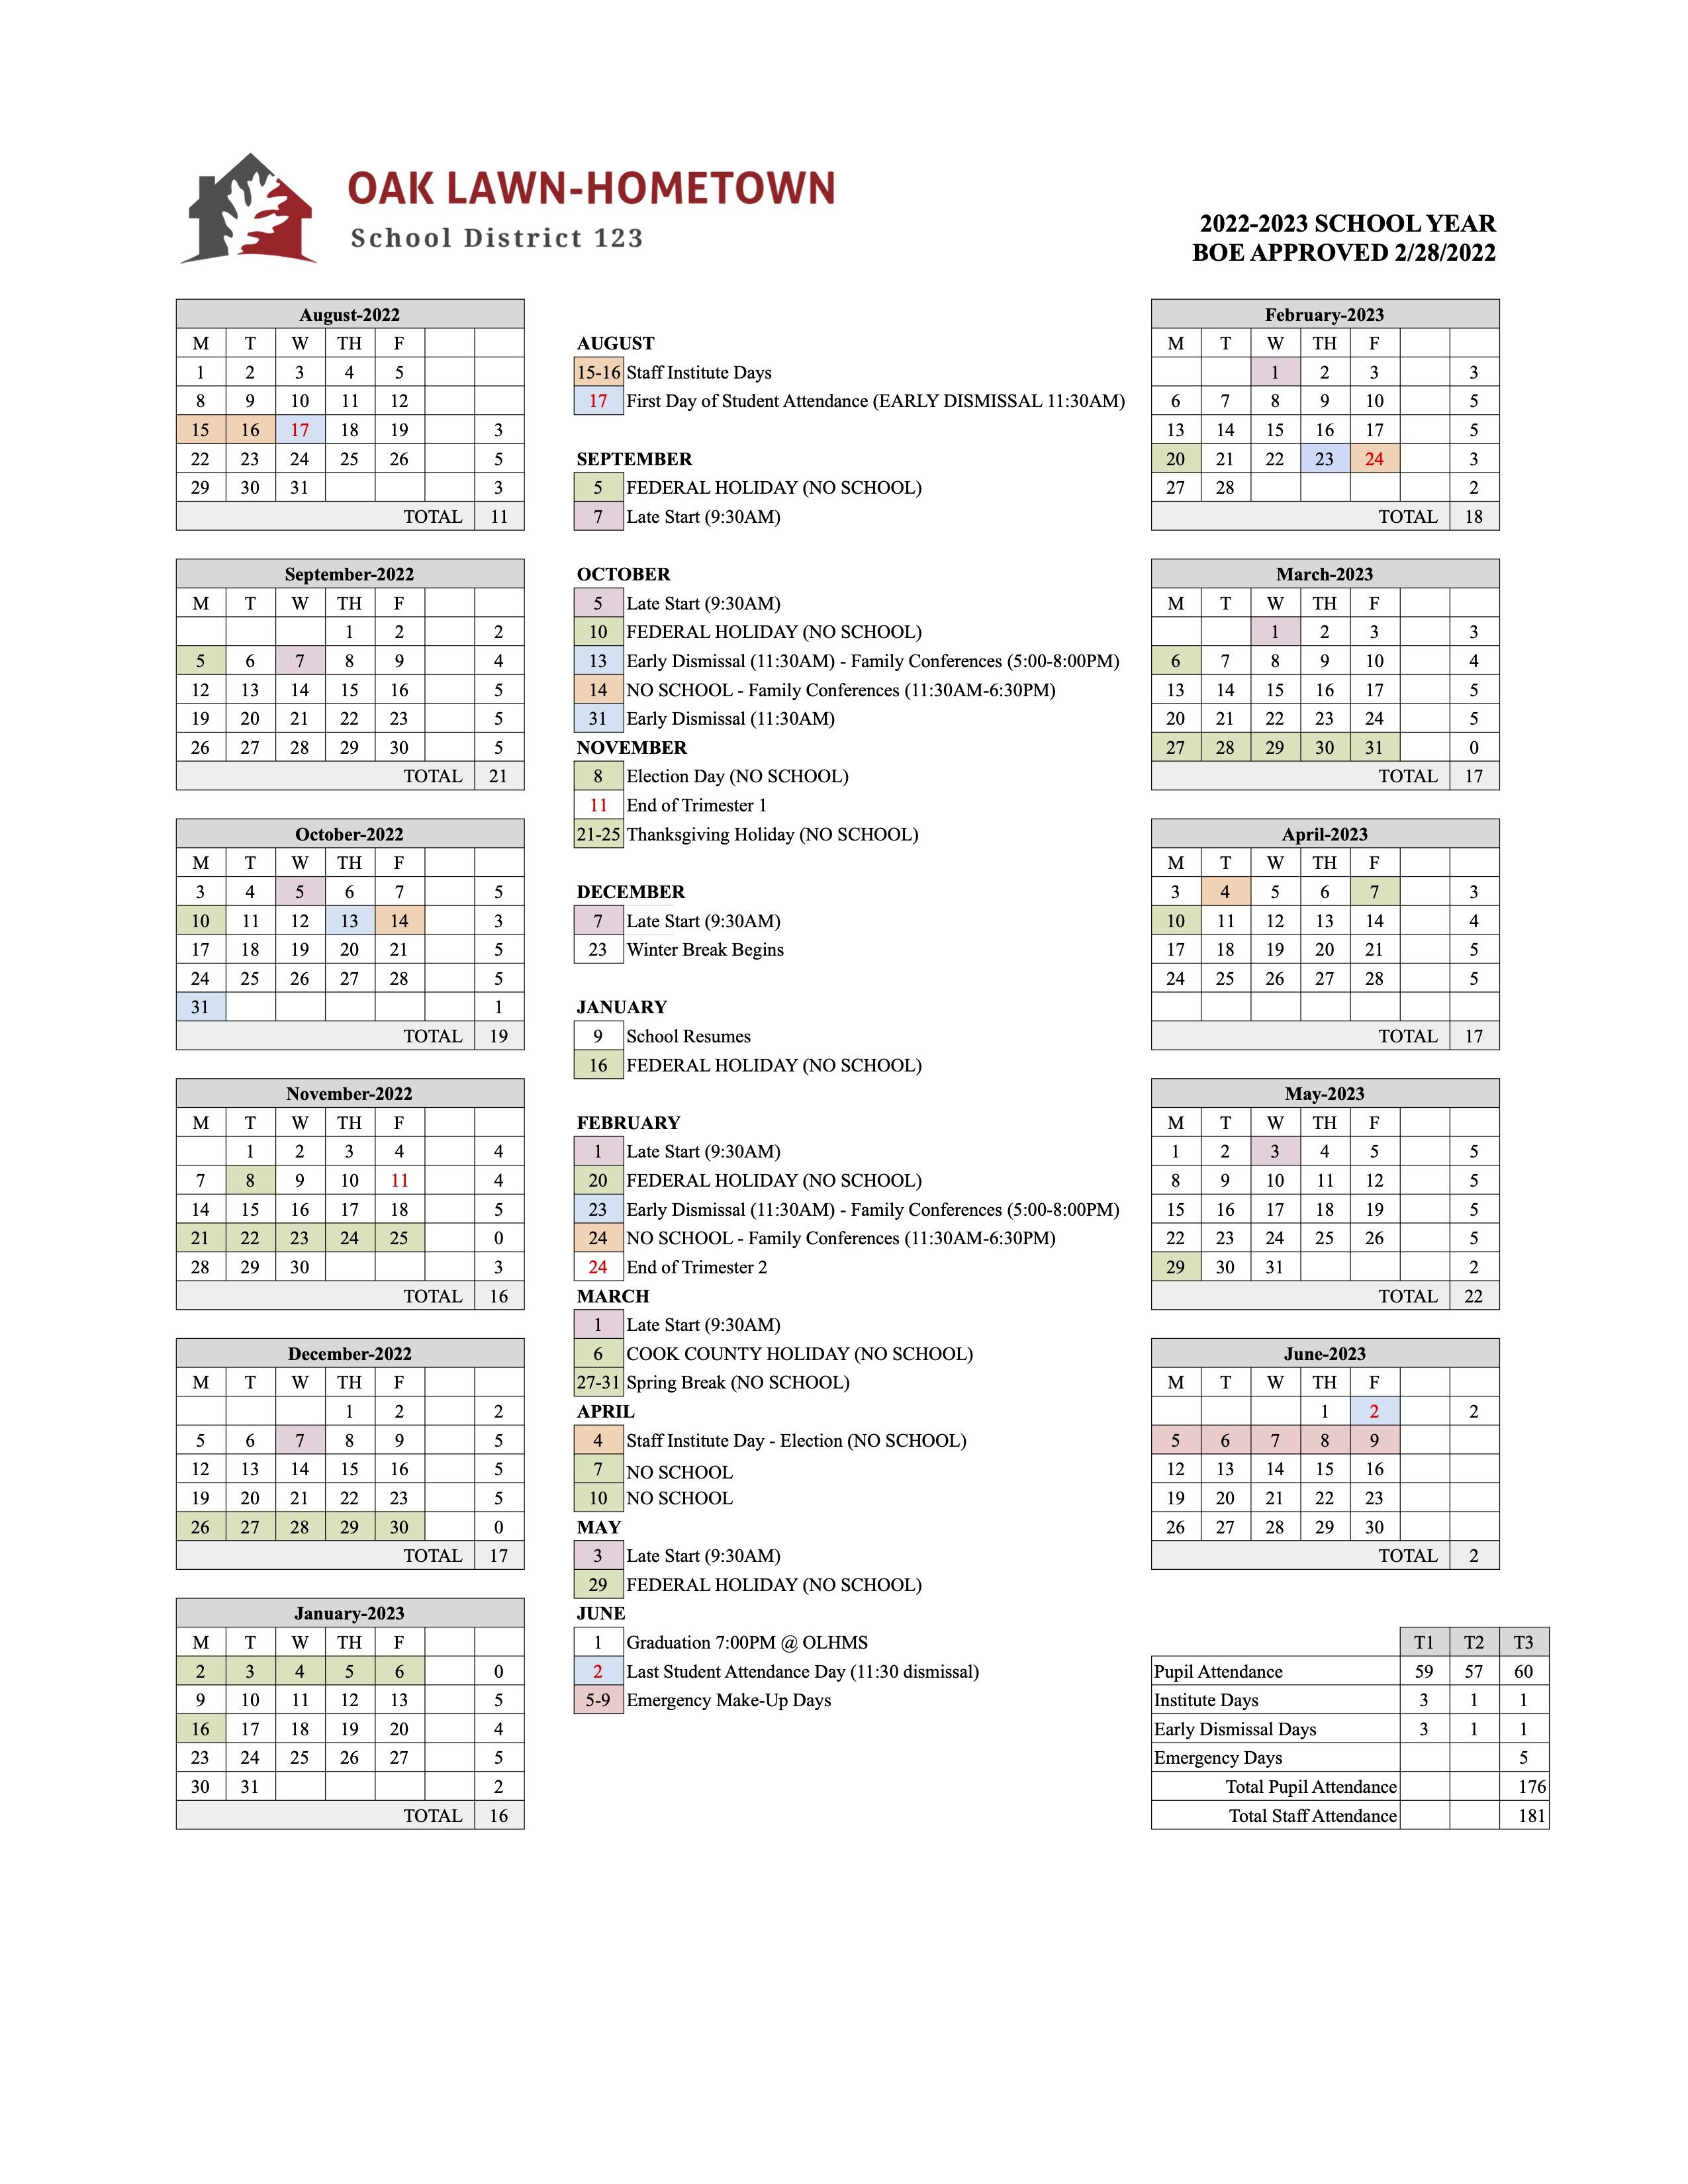 Depaul Academic Calendar 2022 2023 Hza9Hob2C-Jkgm